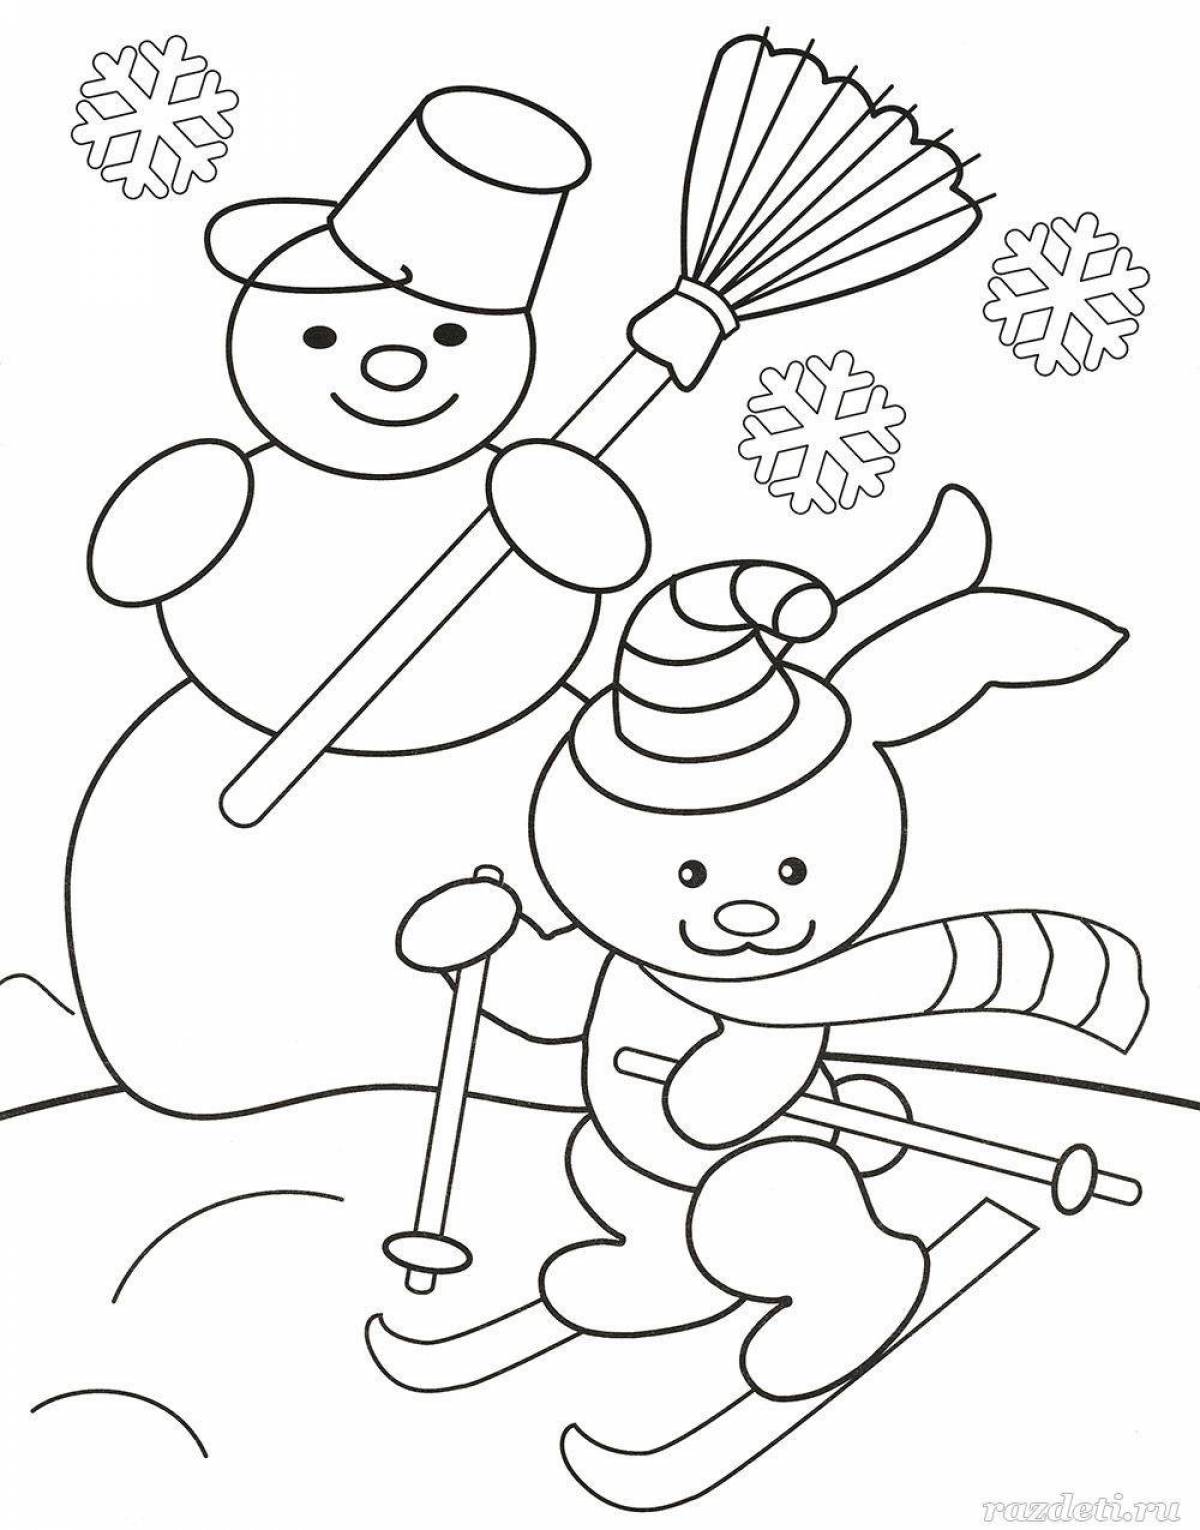 Забавная зимняя раскраска для детей 4-5 лет